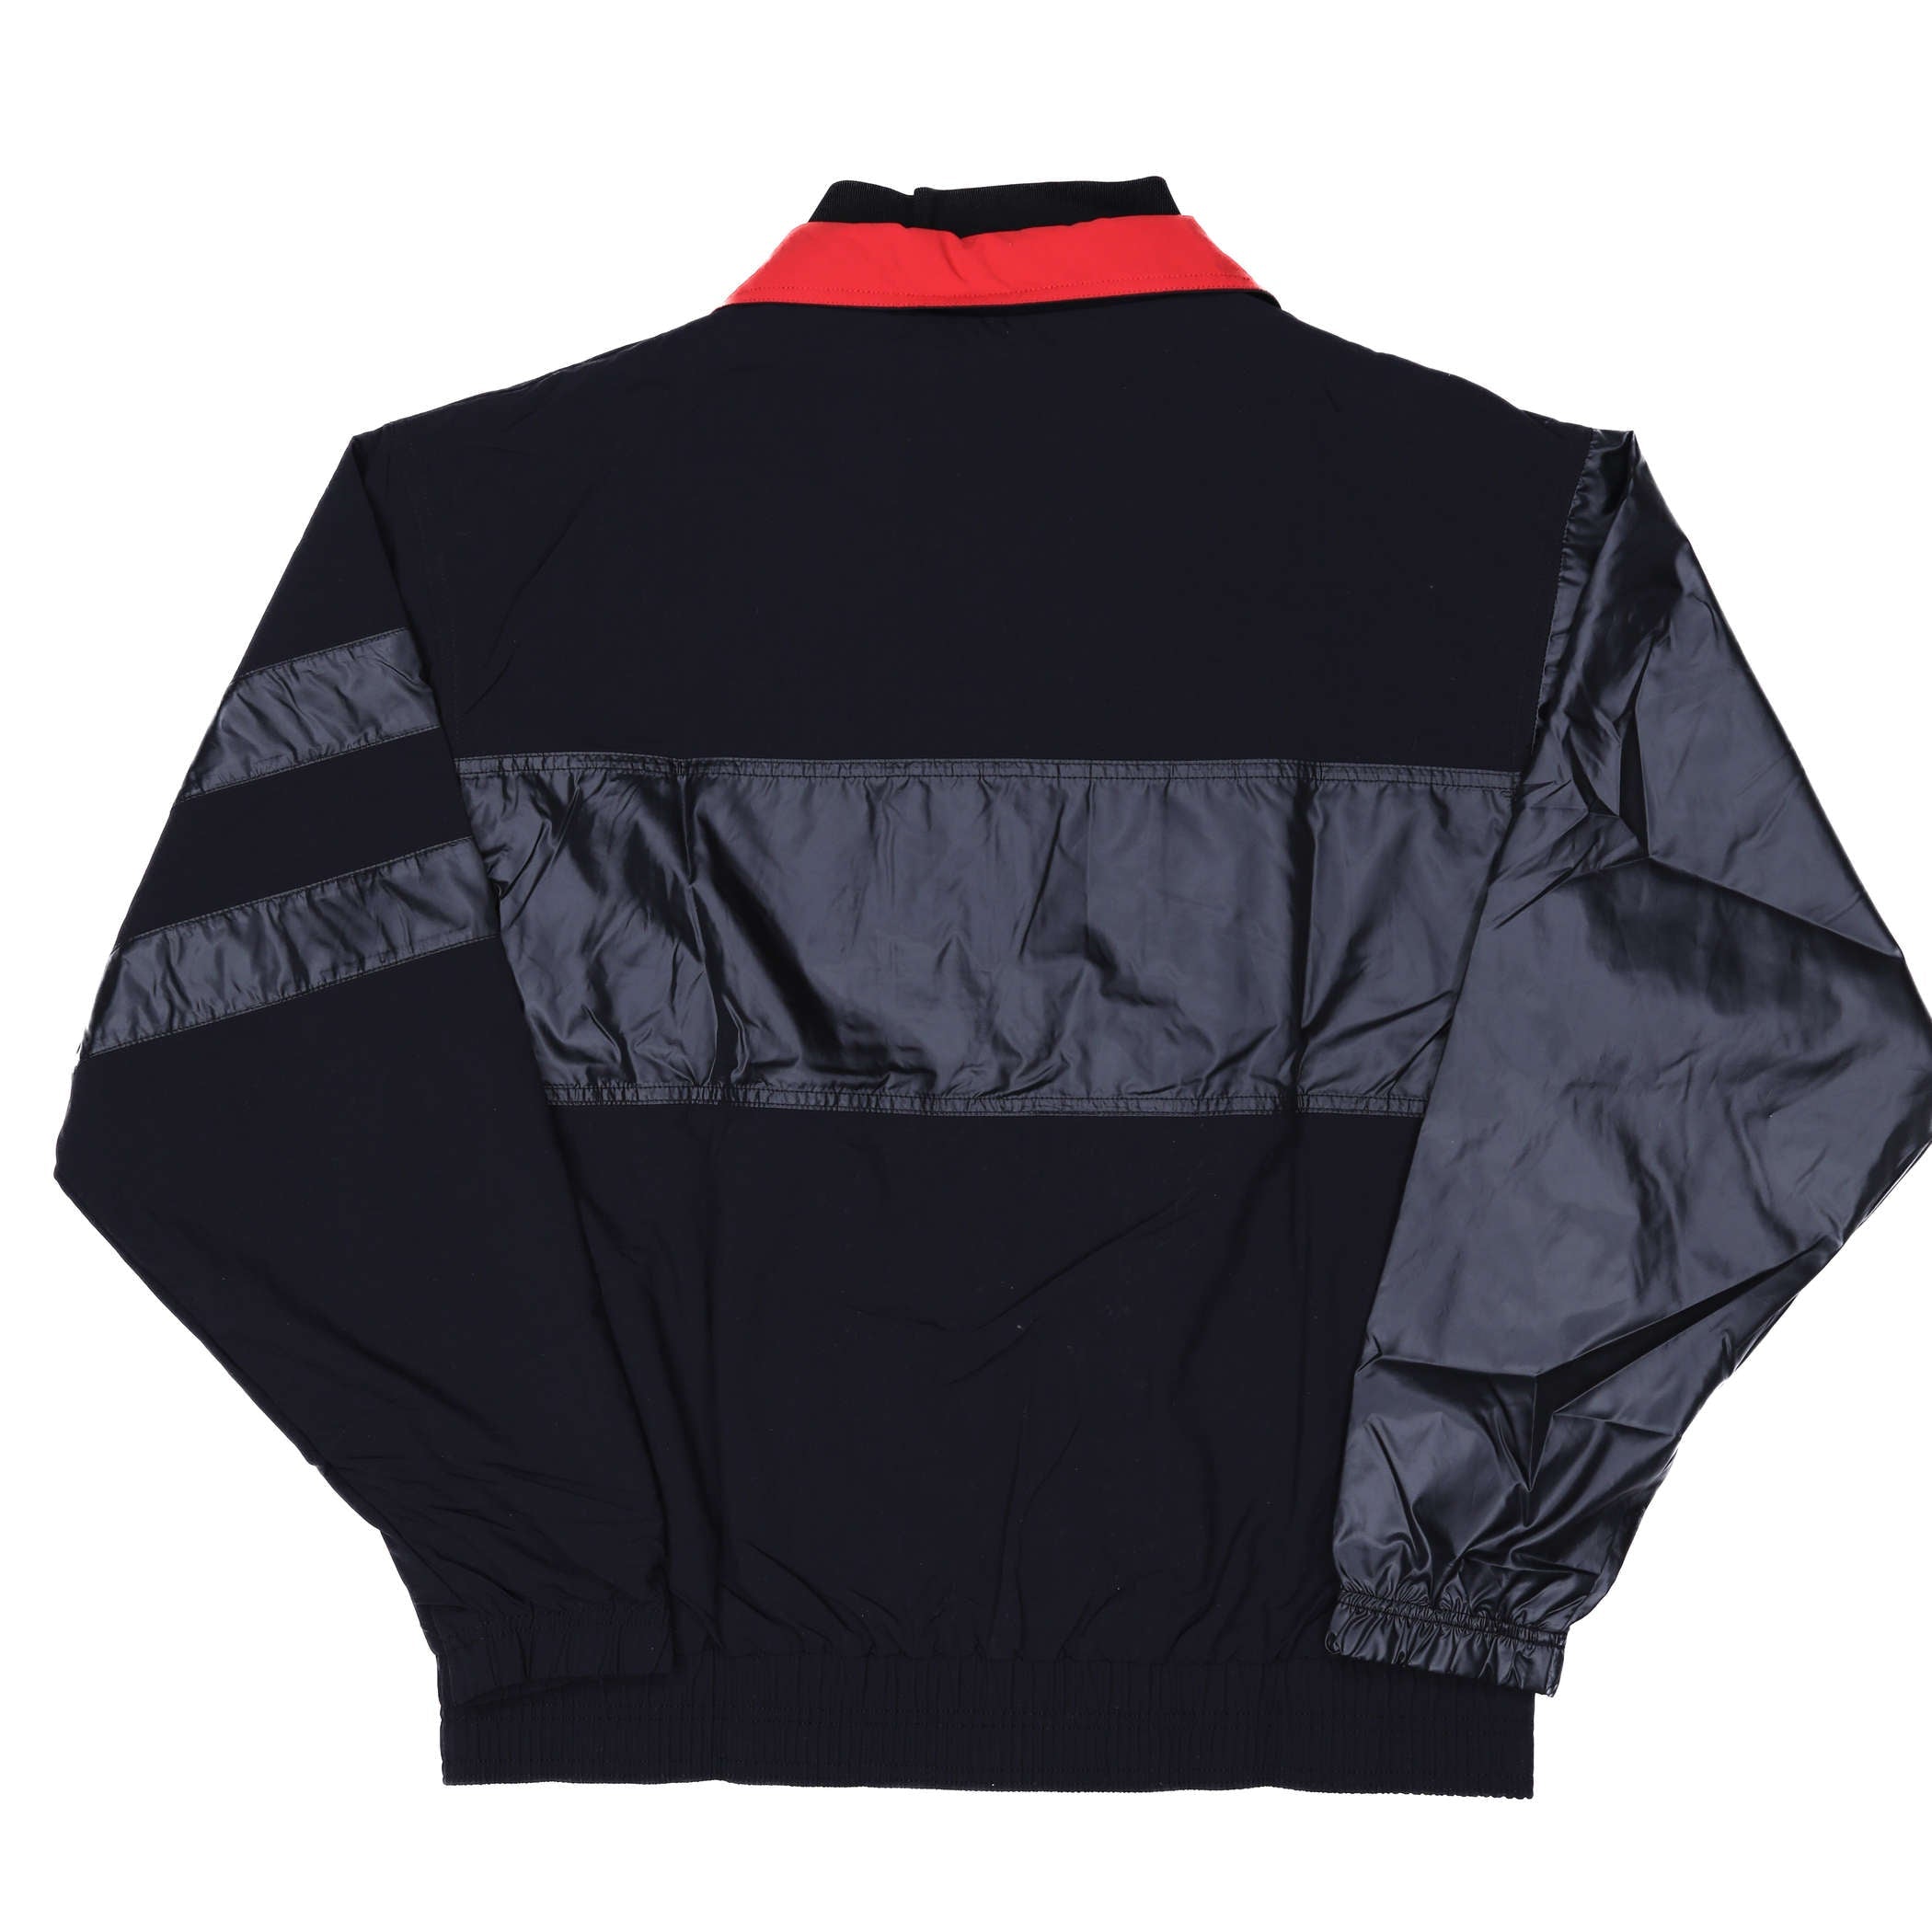 Portland Trail Blazers Nike Black Dribble Jacket - XS - 